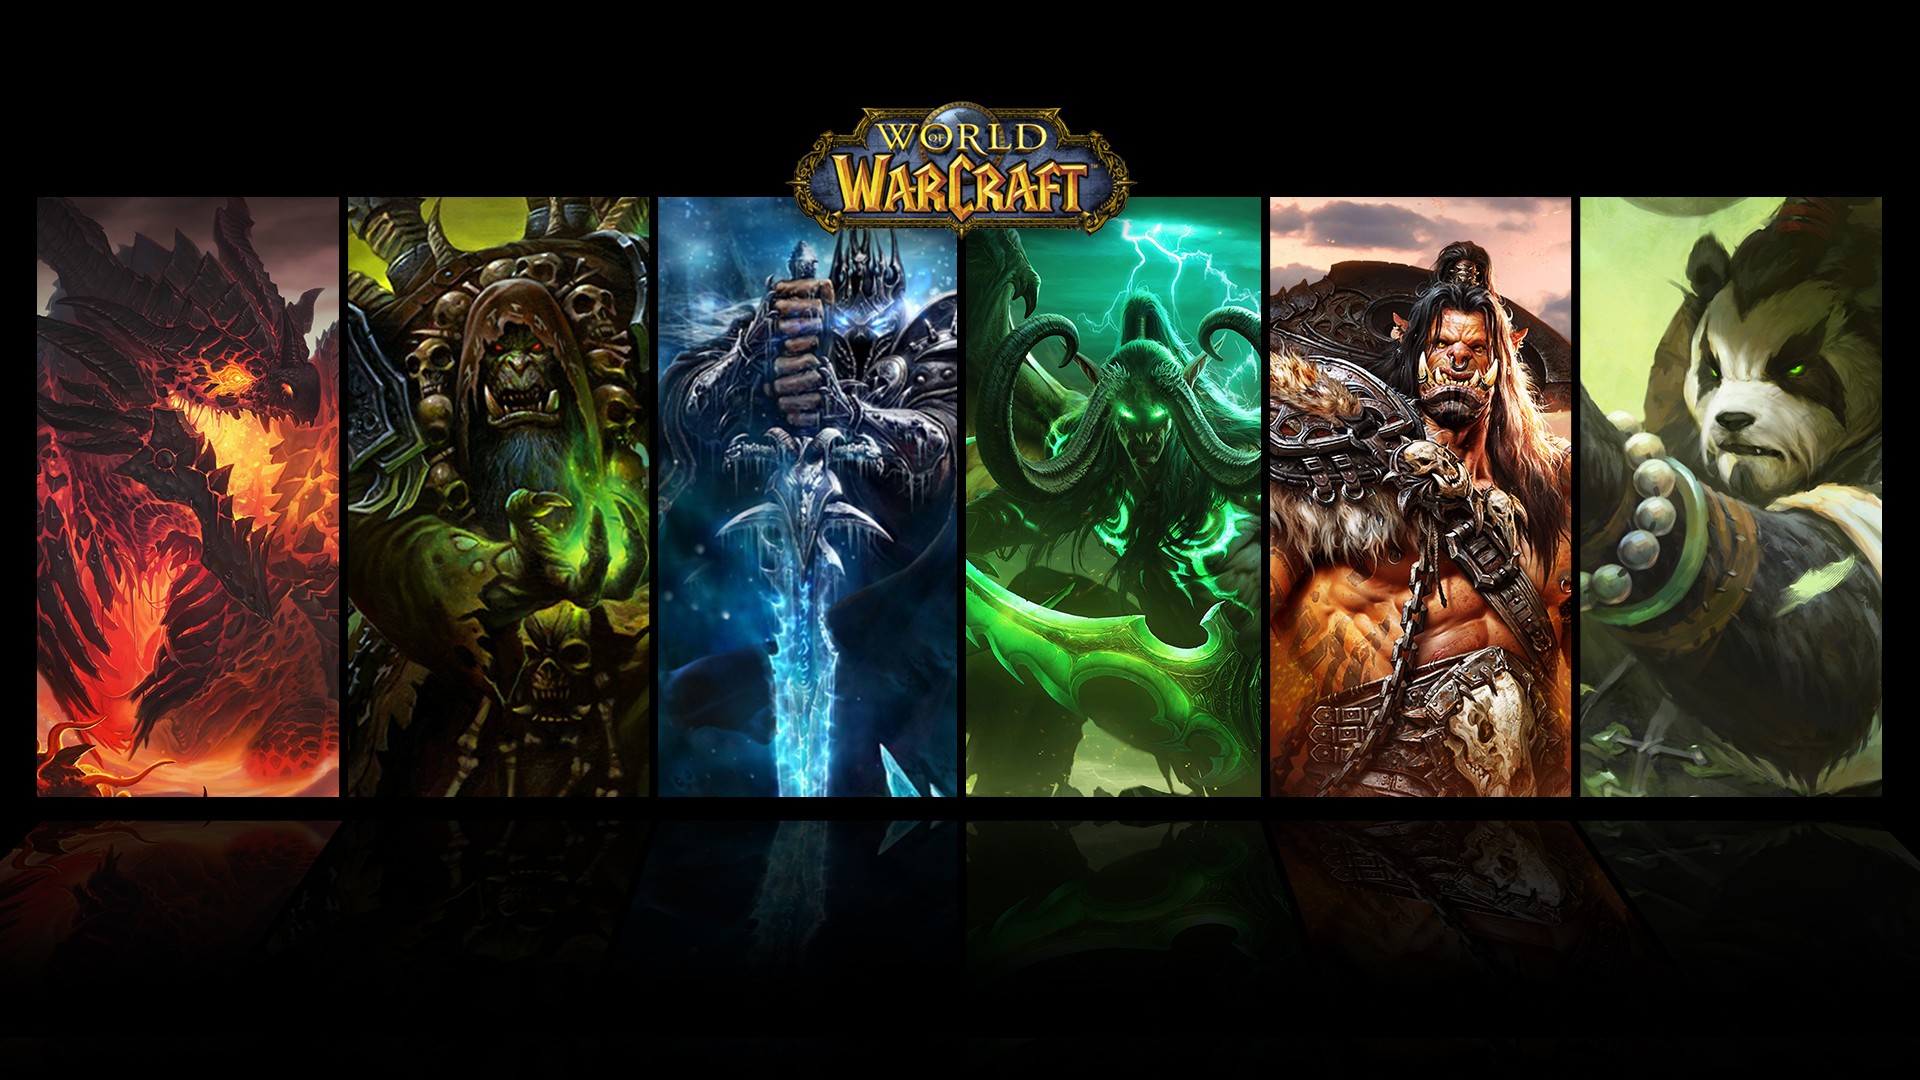 General 1920x1080 World of Warcraft Deathwing Arthas Menethil Gul'dan Illidan Stormrage Grom Hellscream Warcraft collage video games PC gaming video game art